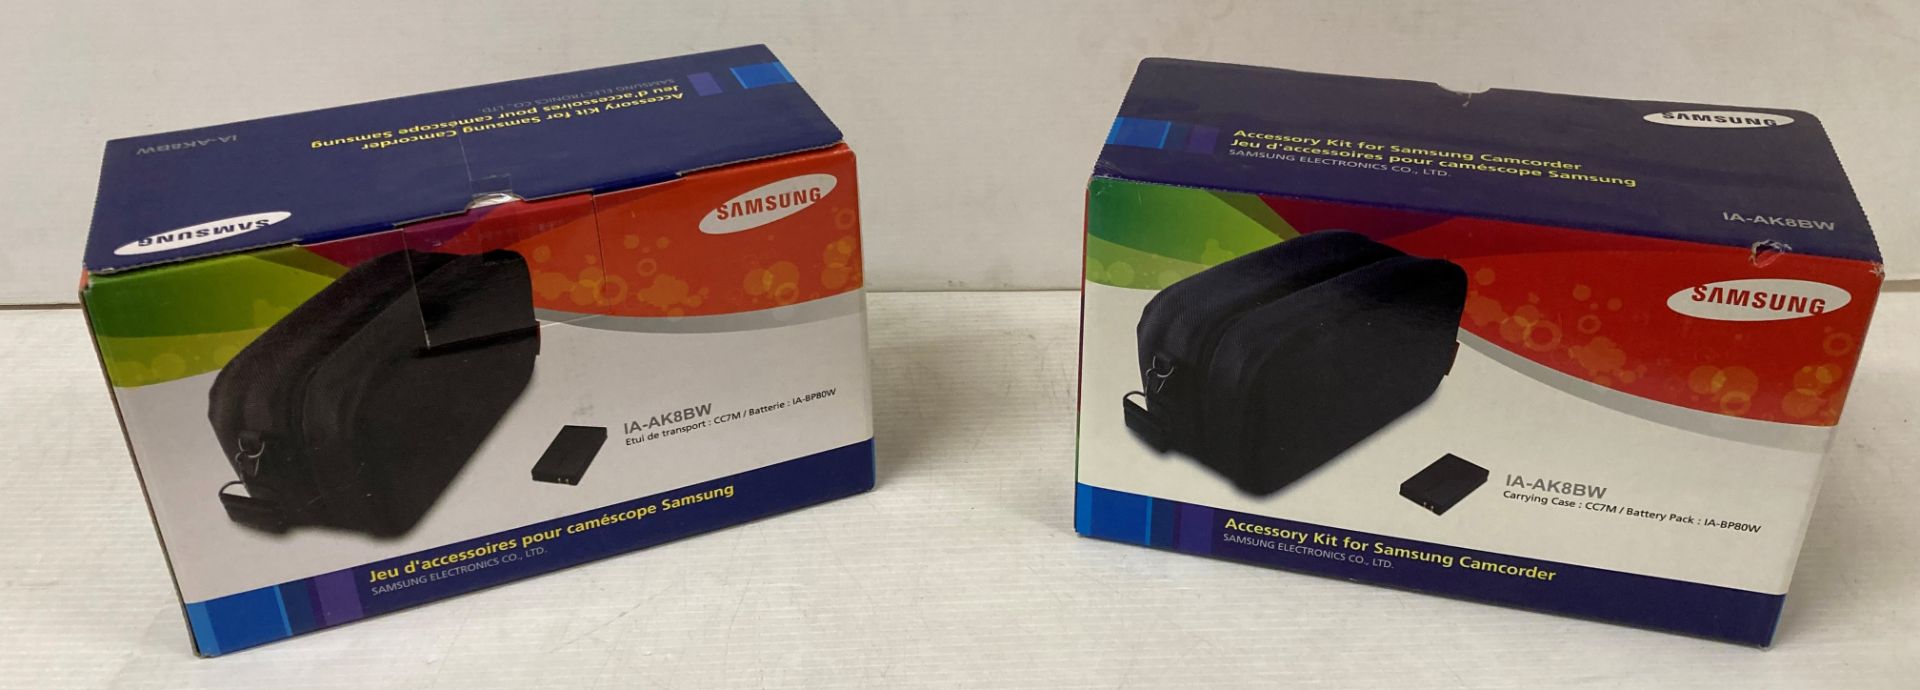 15 x Samsung accessory kits for Samsung camcorders (saleroom location: J12 FLOOR) Further